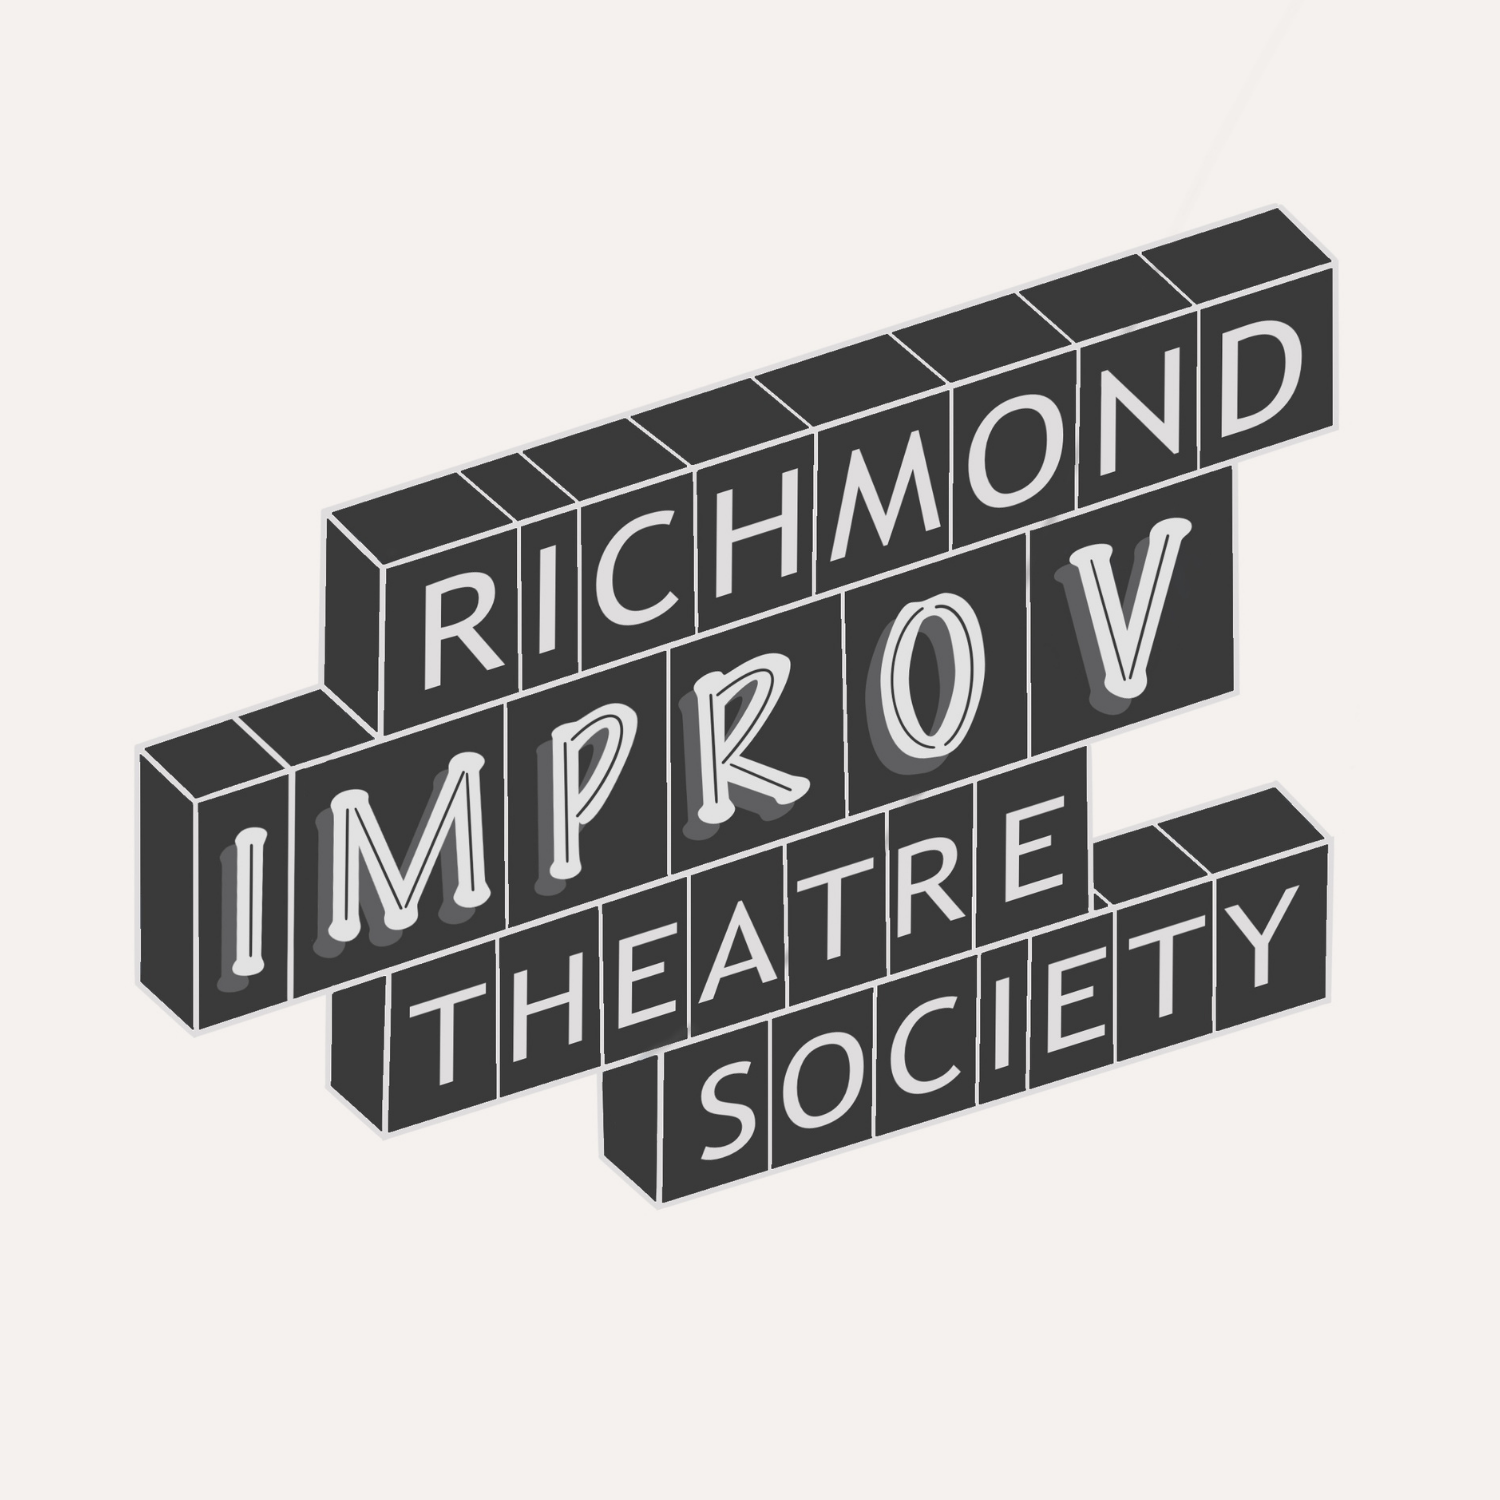 Richmond Improv Theatre Society